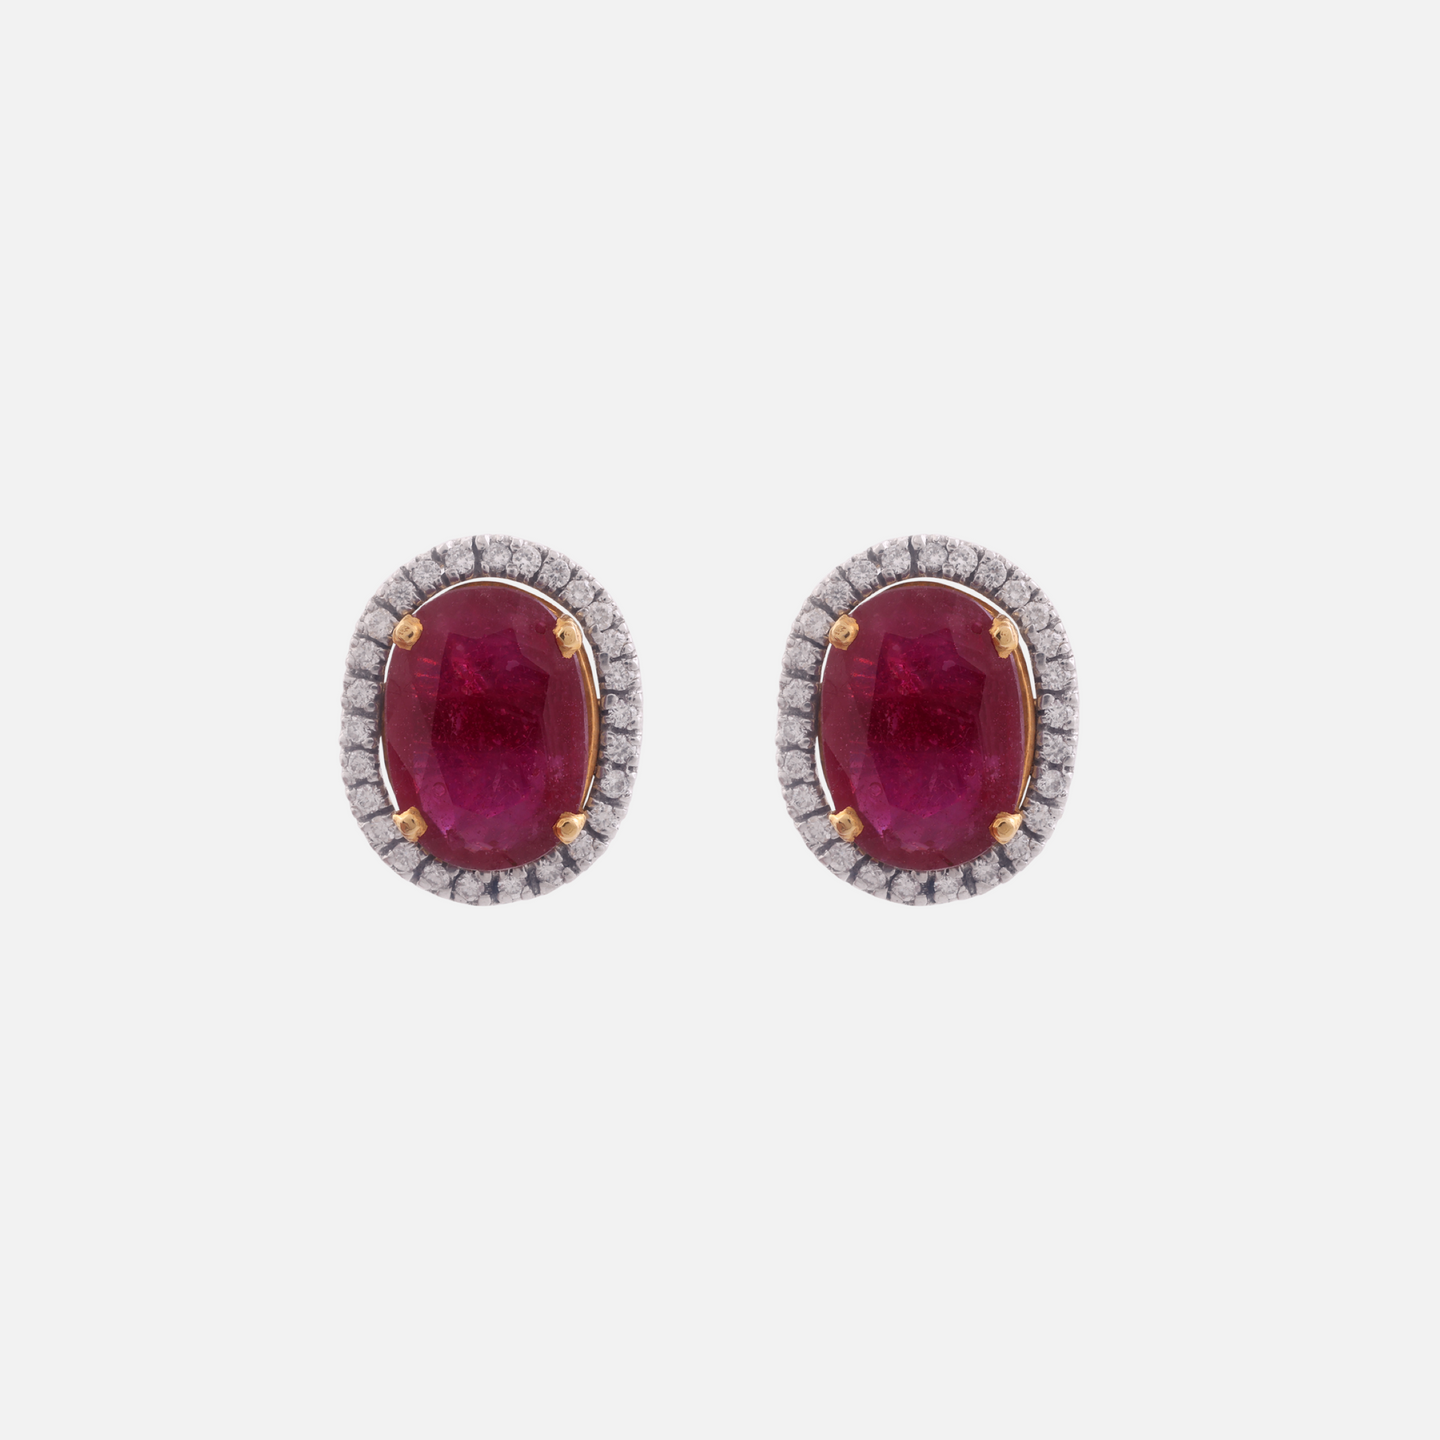 18K Gold Oval Ruby Earrings with Diamonds